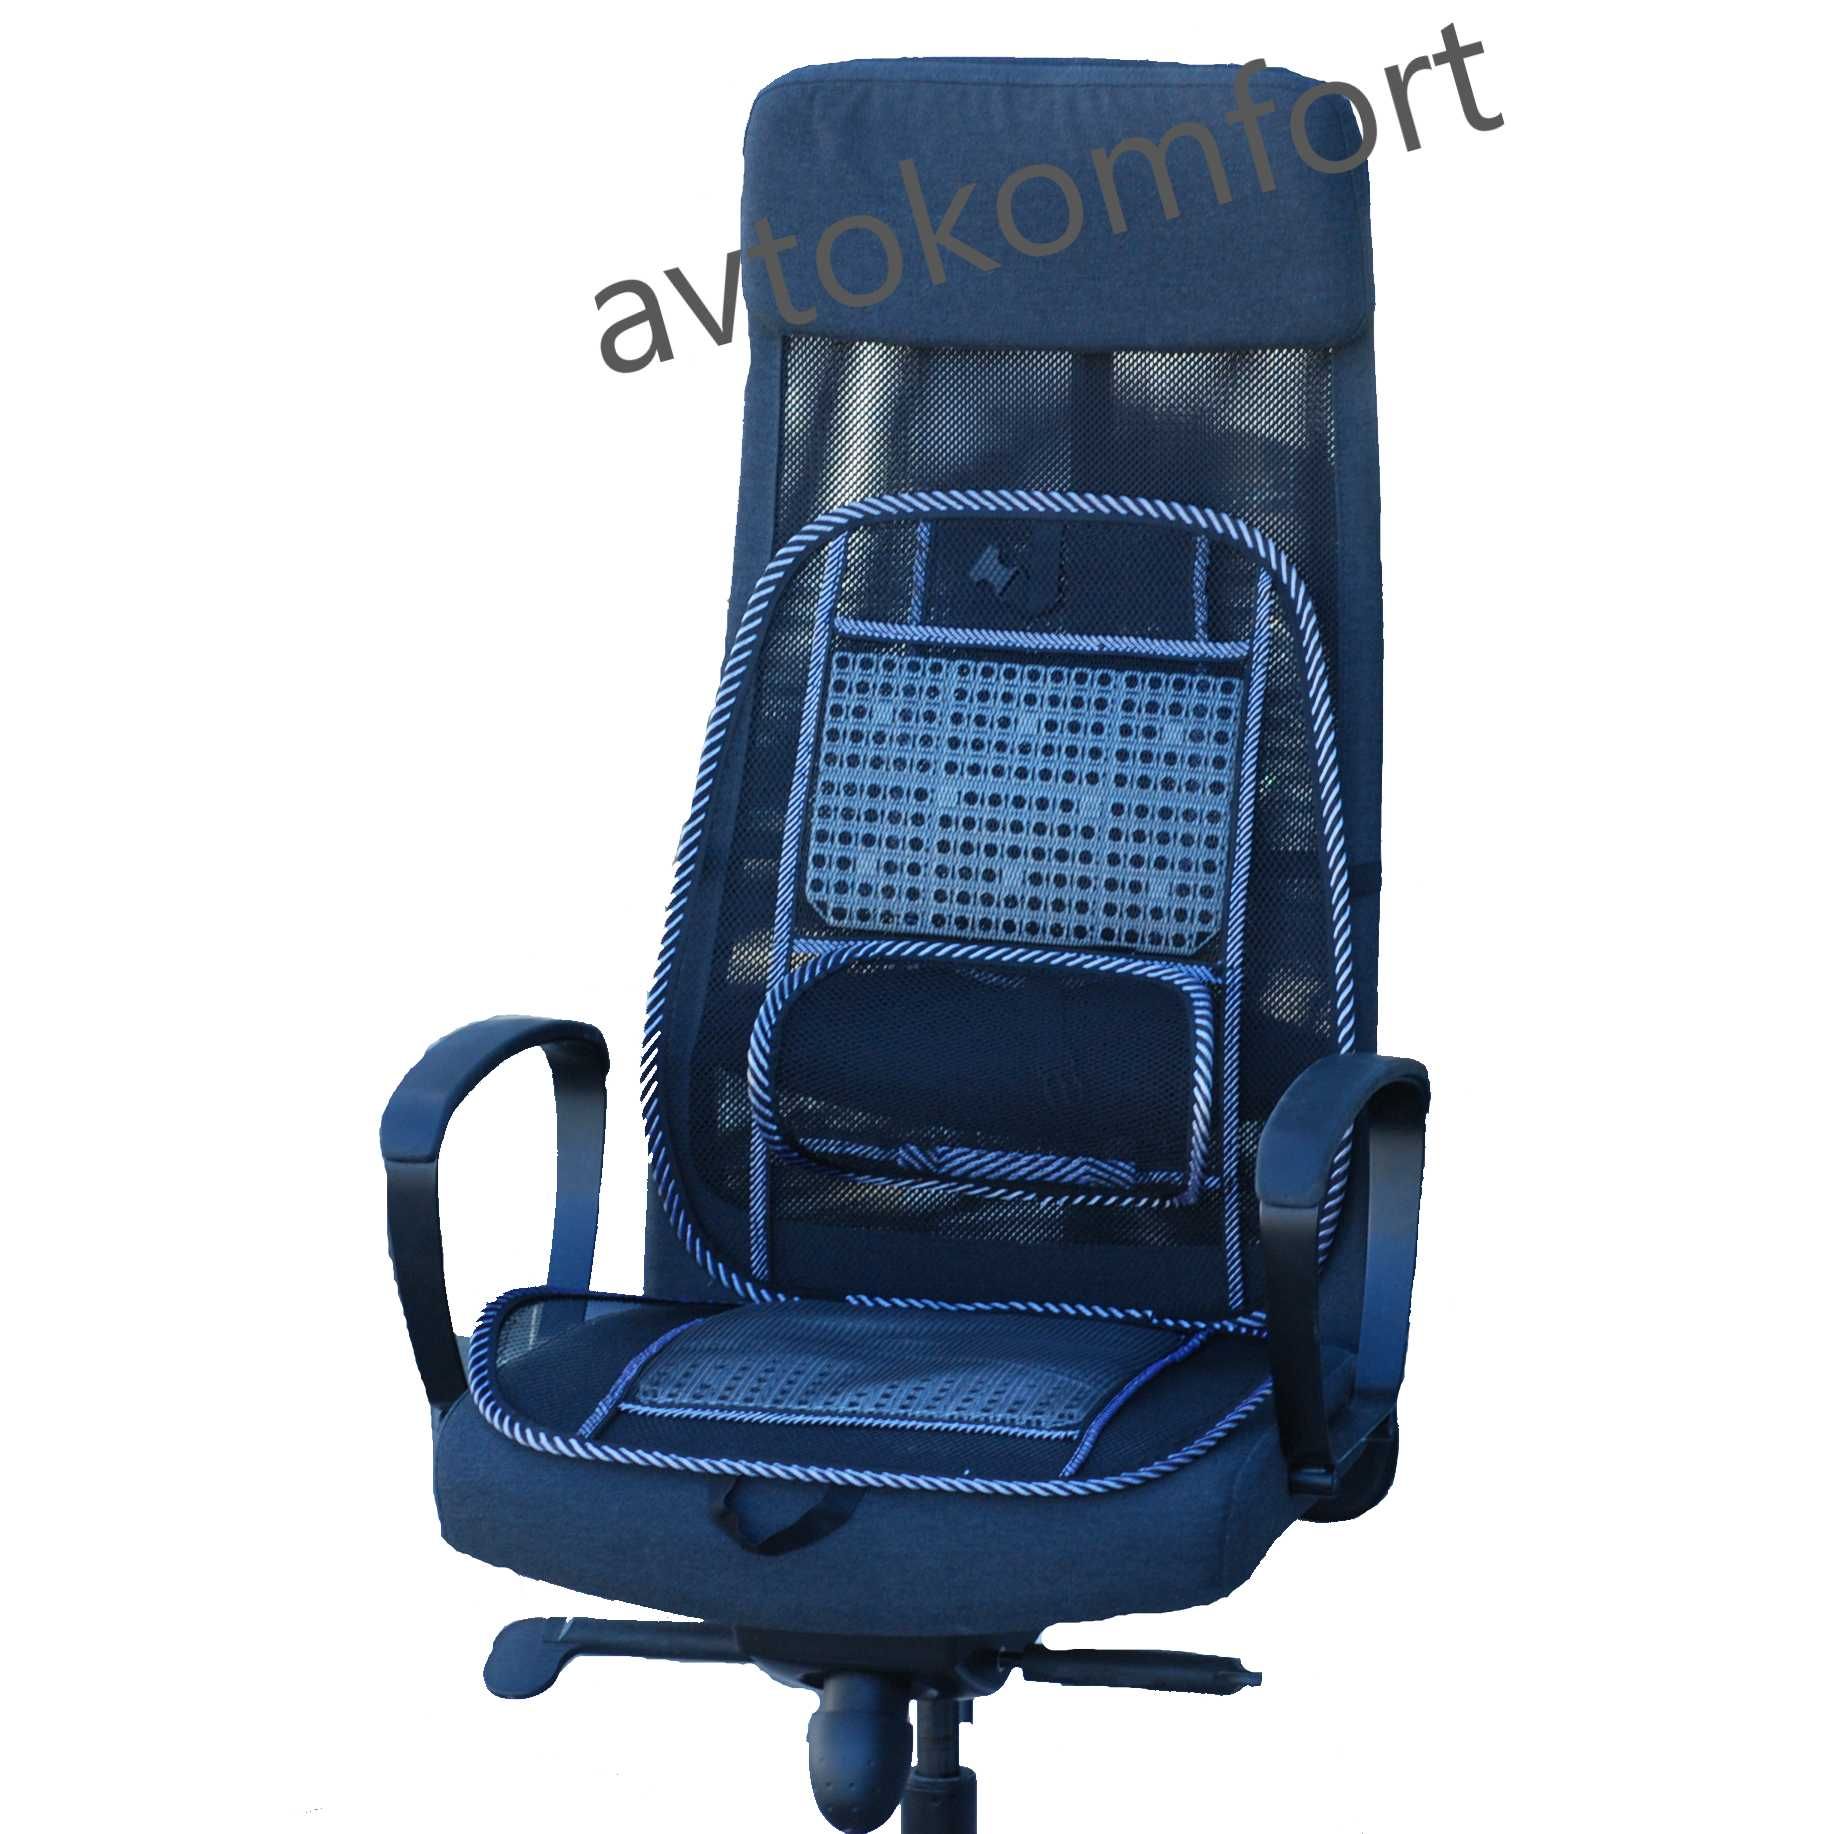 Анатомична Облегалка За Автомобилна Седалка Или Офис Стол С Код КР 850